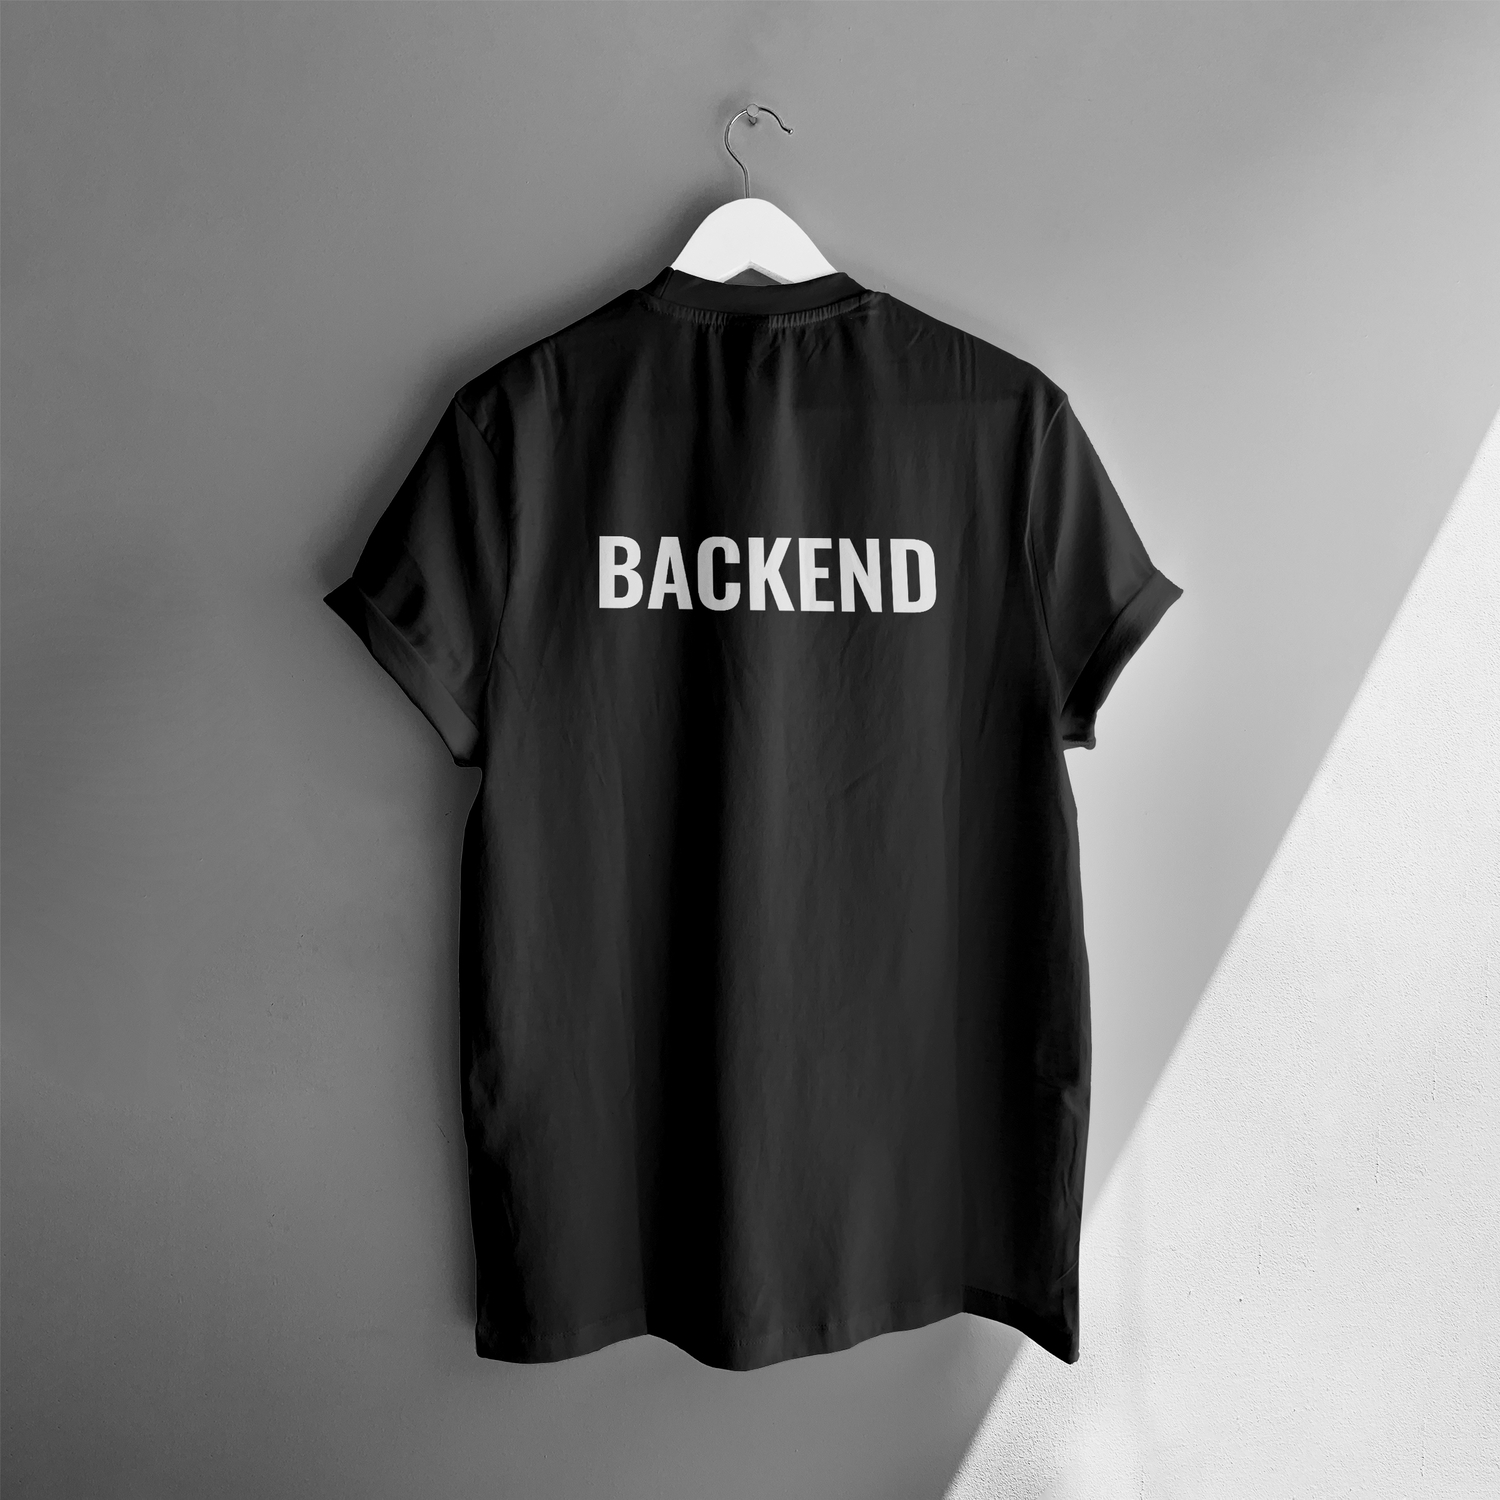 "Frontend - Backend" (футболка)